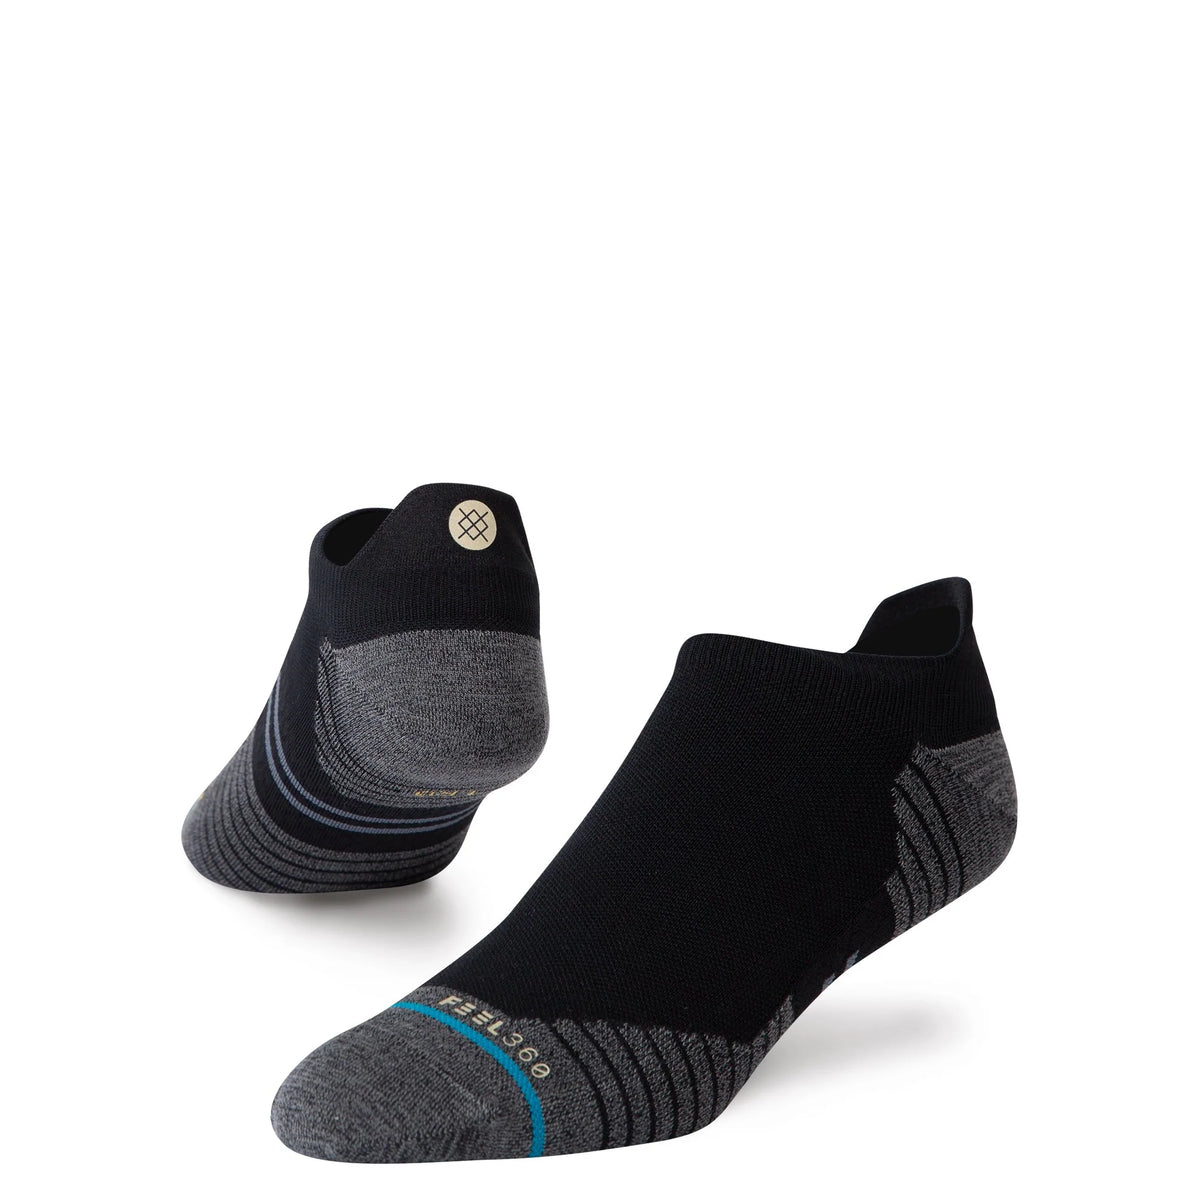 Stance Socks Tab Cut  - Run Light Black or White